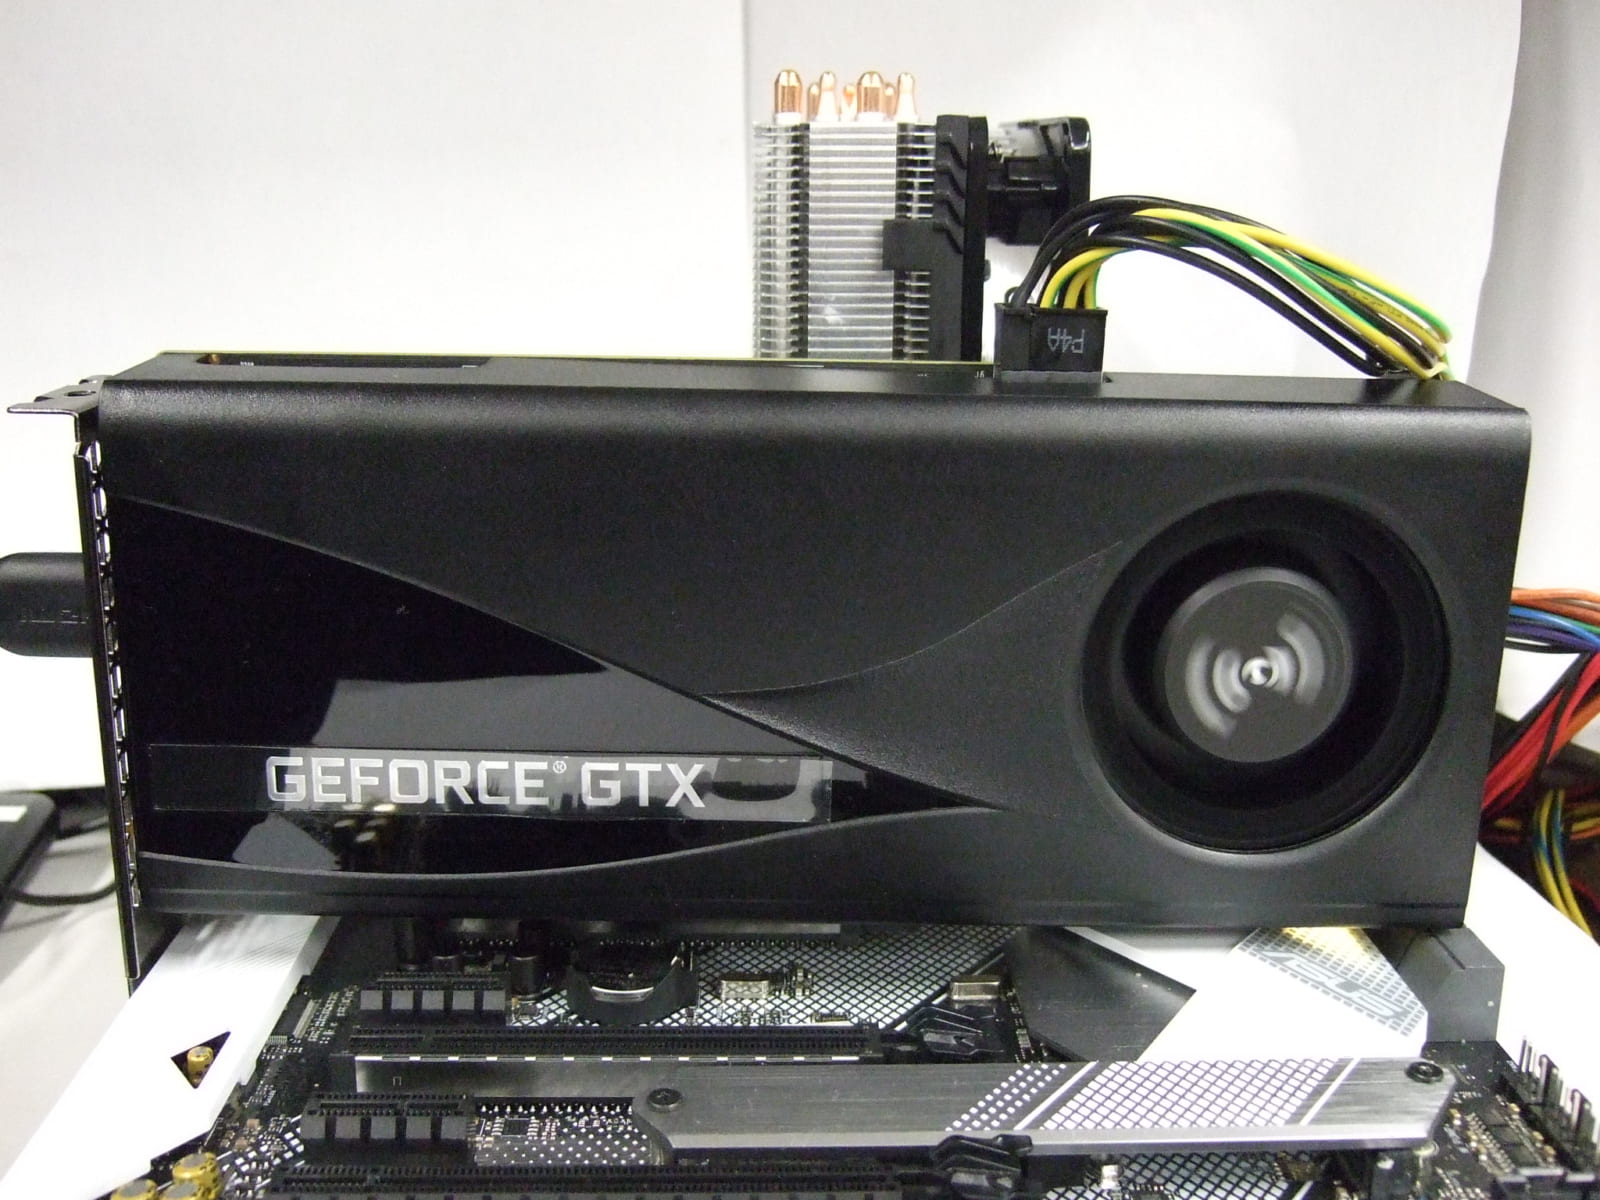 【新品未使用】NVIDIA GeForce RTX1660 super